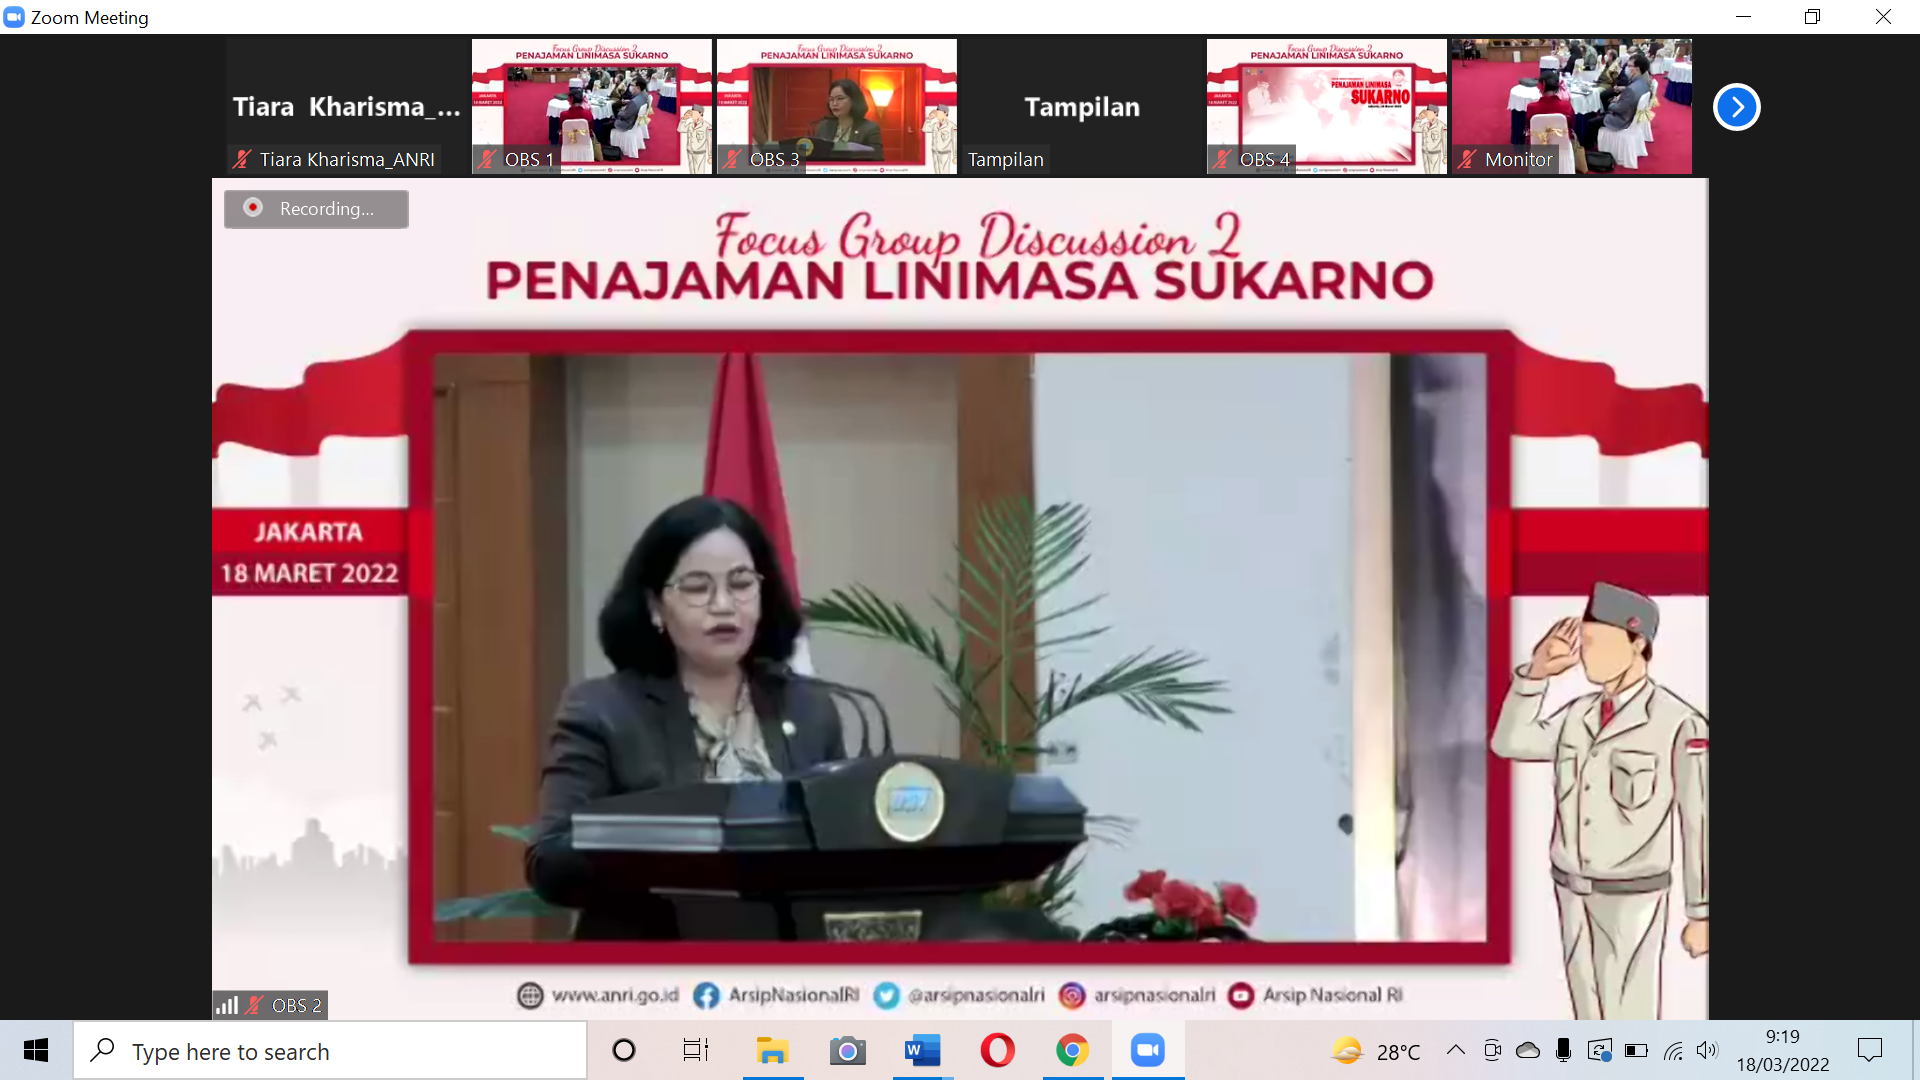 Penajaman Linimasa Sukarno, Menuju Kongres Sejarah Bung Karno